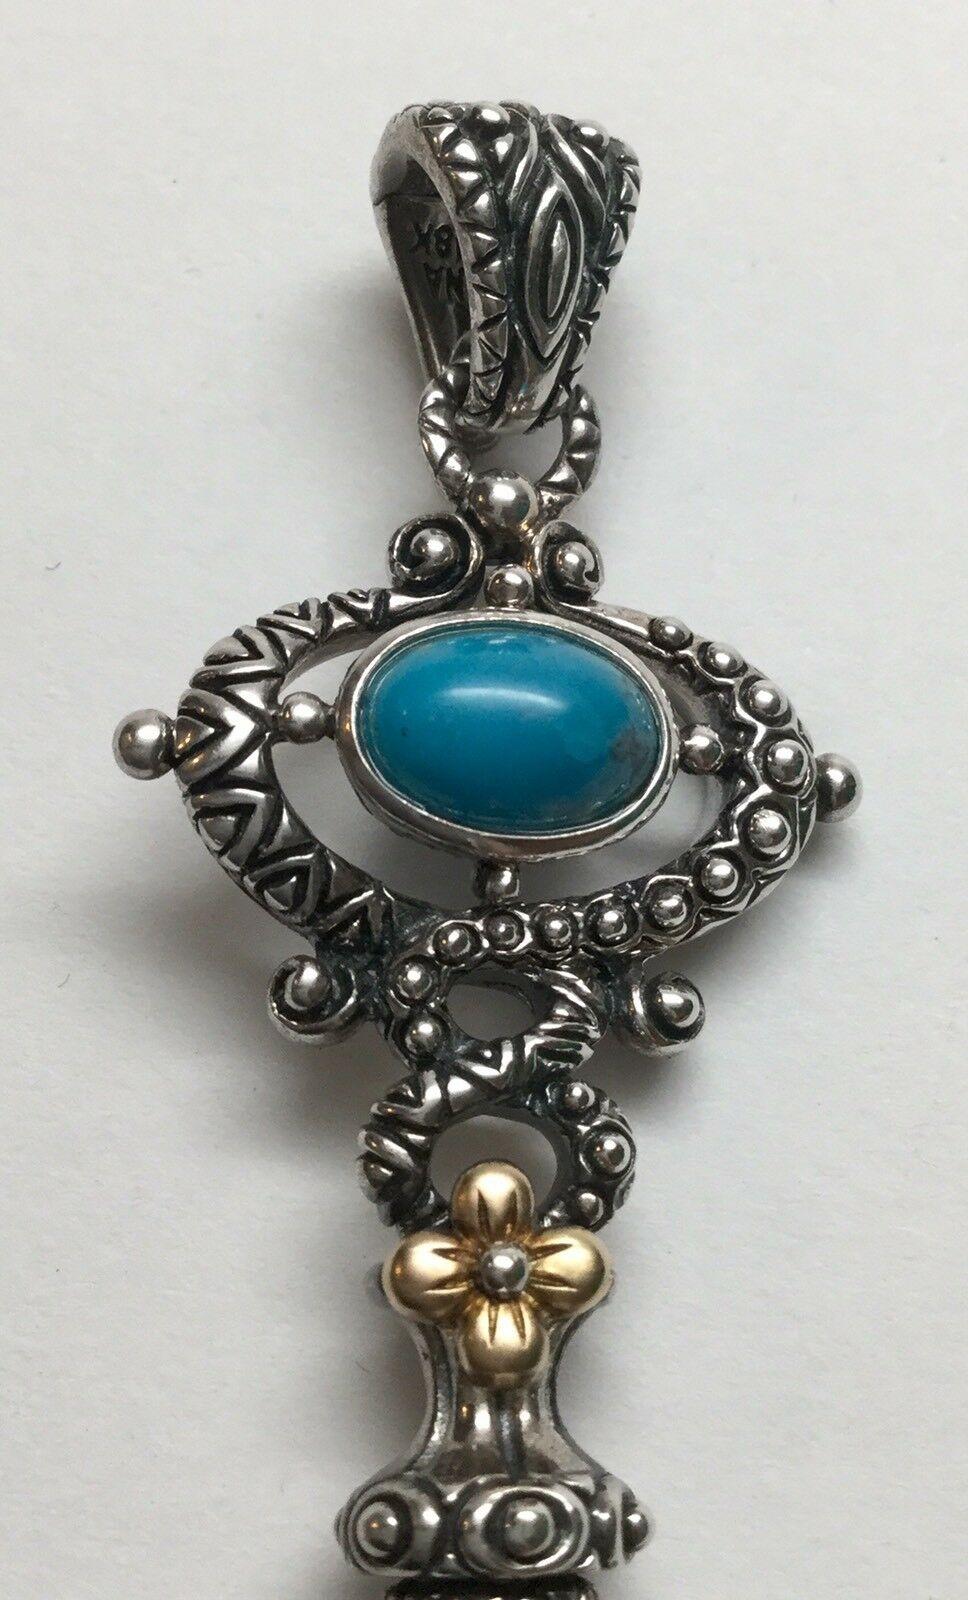 Barbara Bixby sterling silver 18K turquoise key pendant enhancer.

Marked: Bixby 925 18K

Measures: 2 1/4